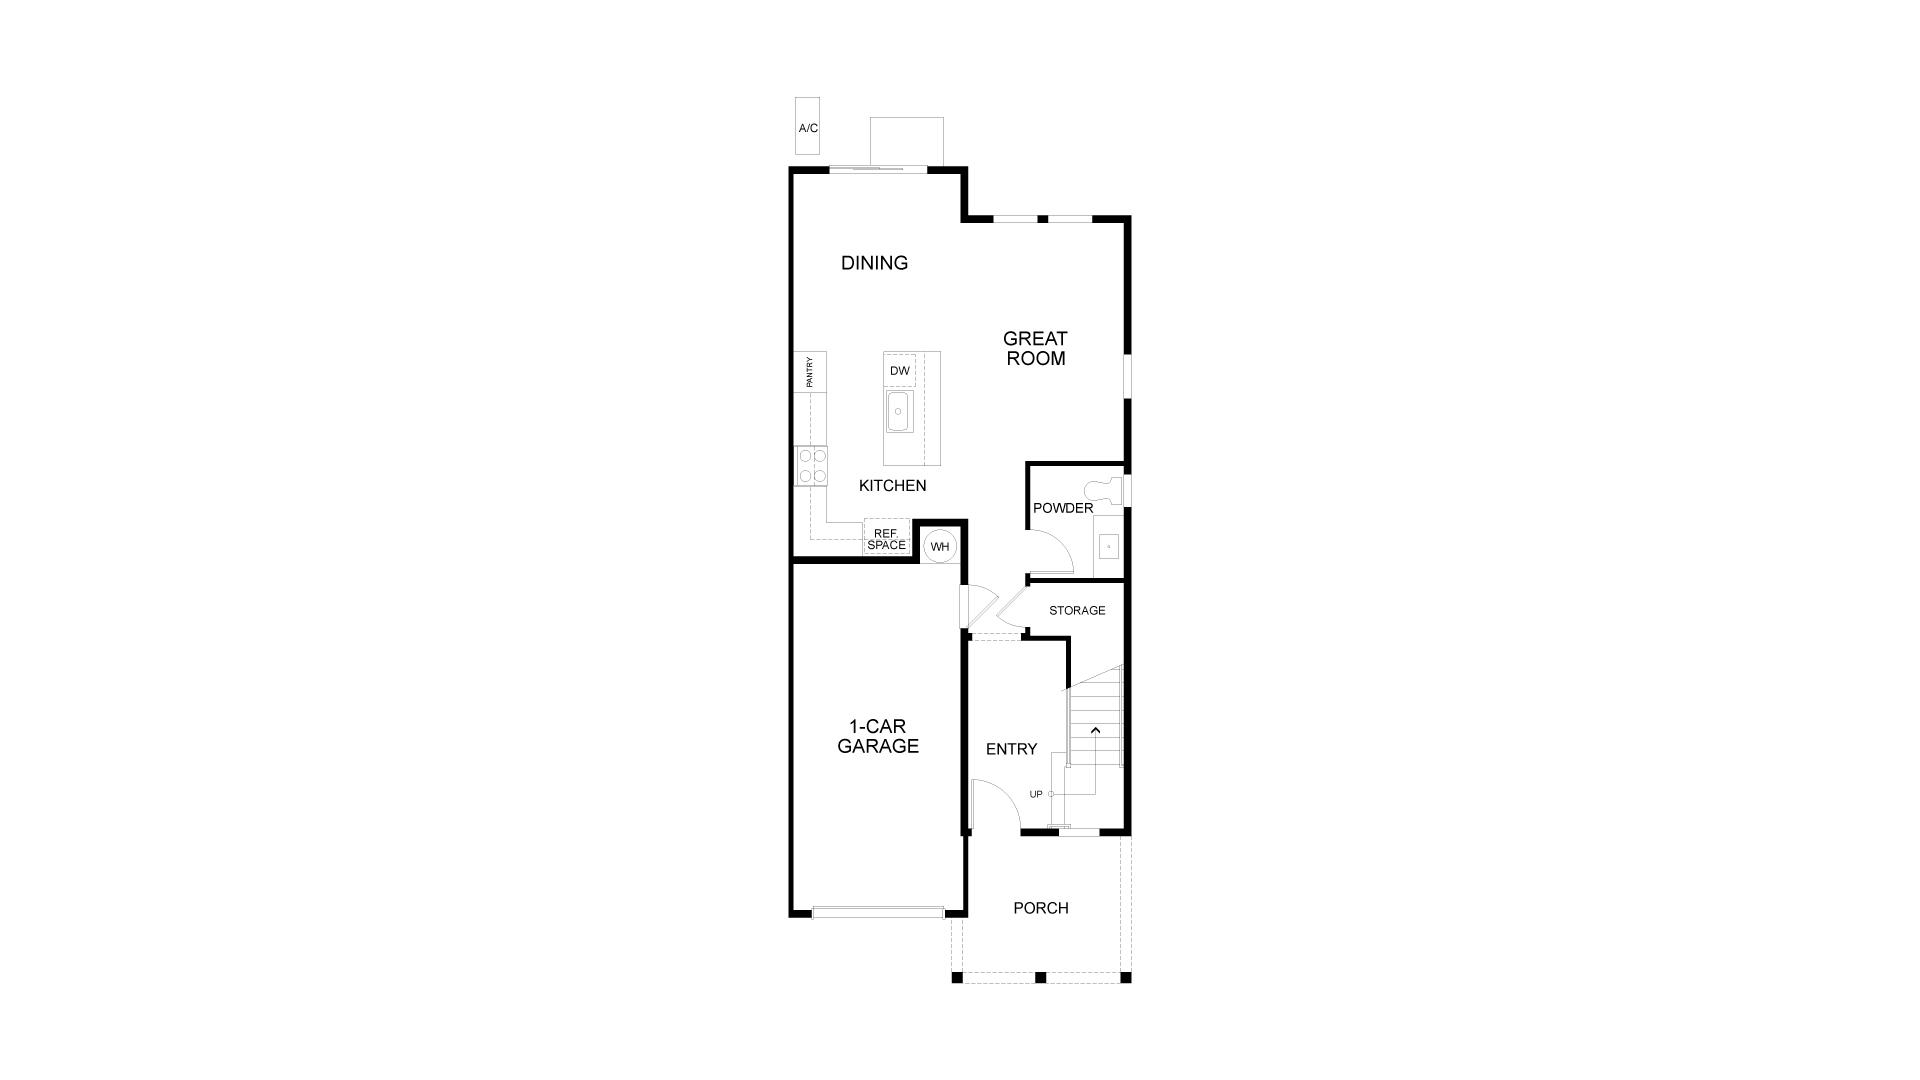 Residence 1 First Floor. New Home in Petaluma, CA